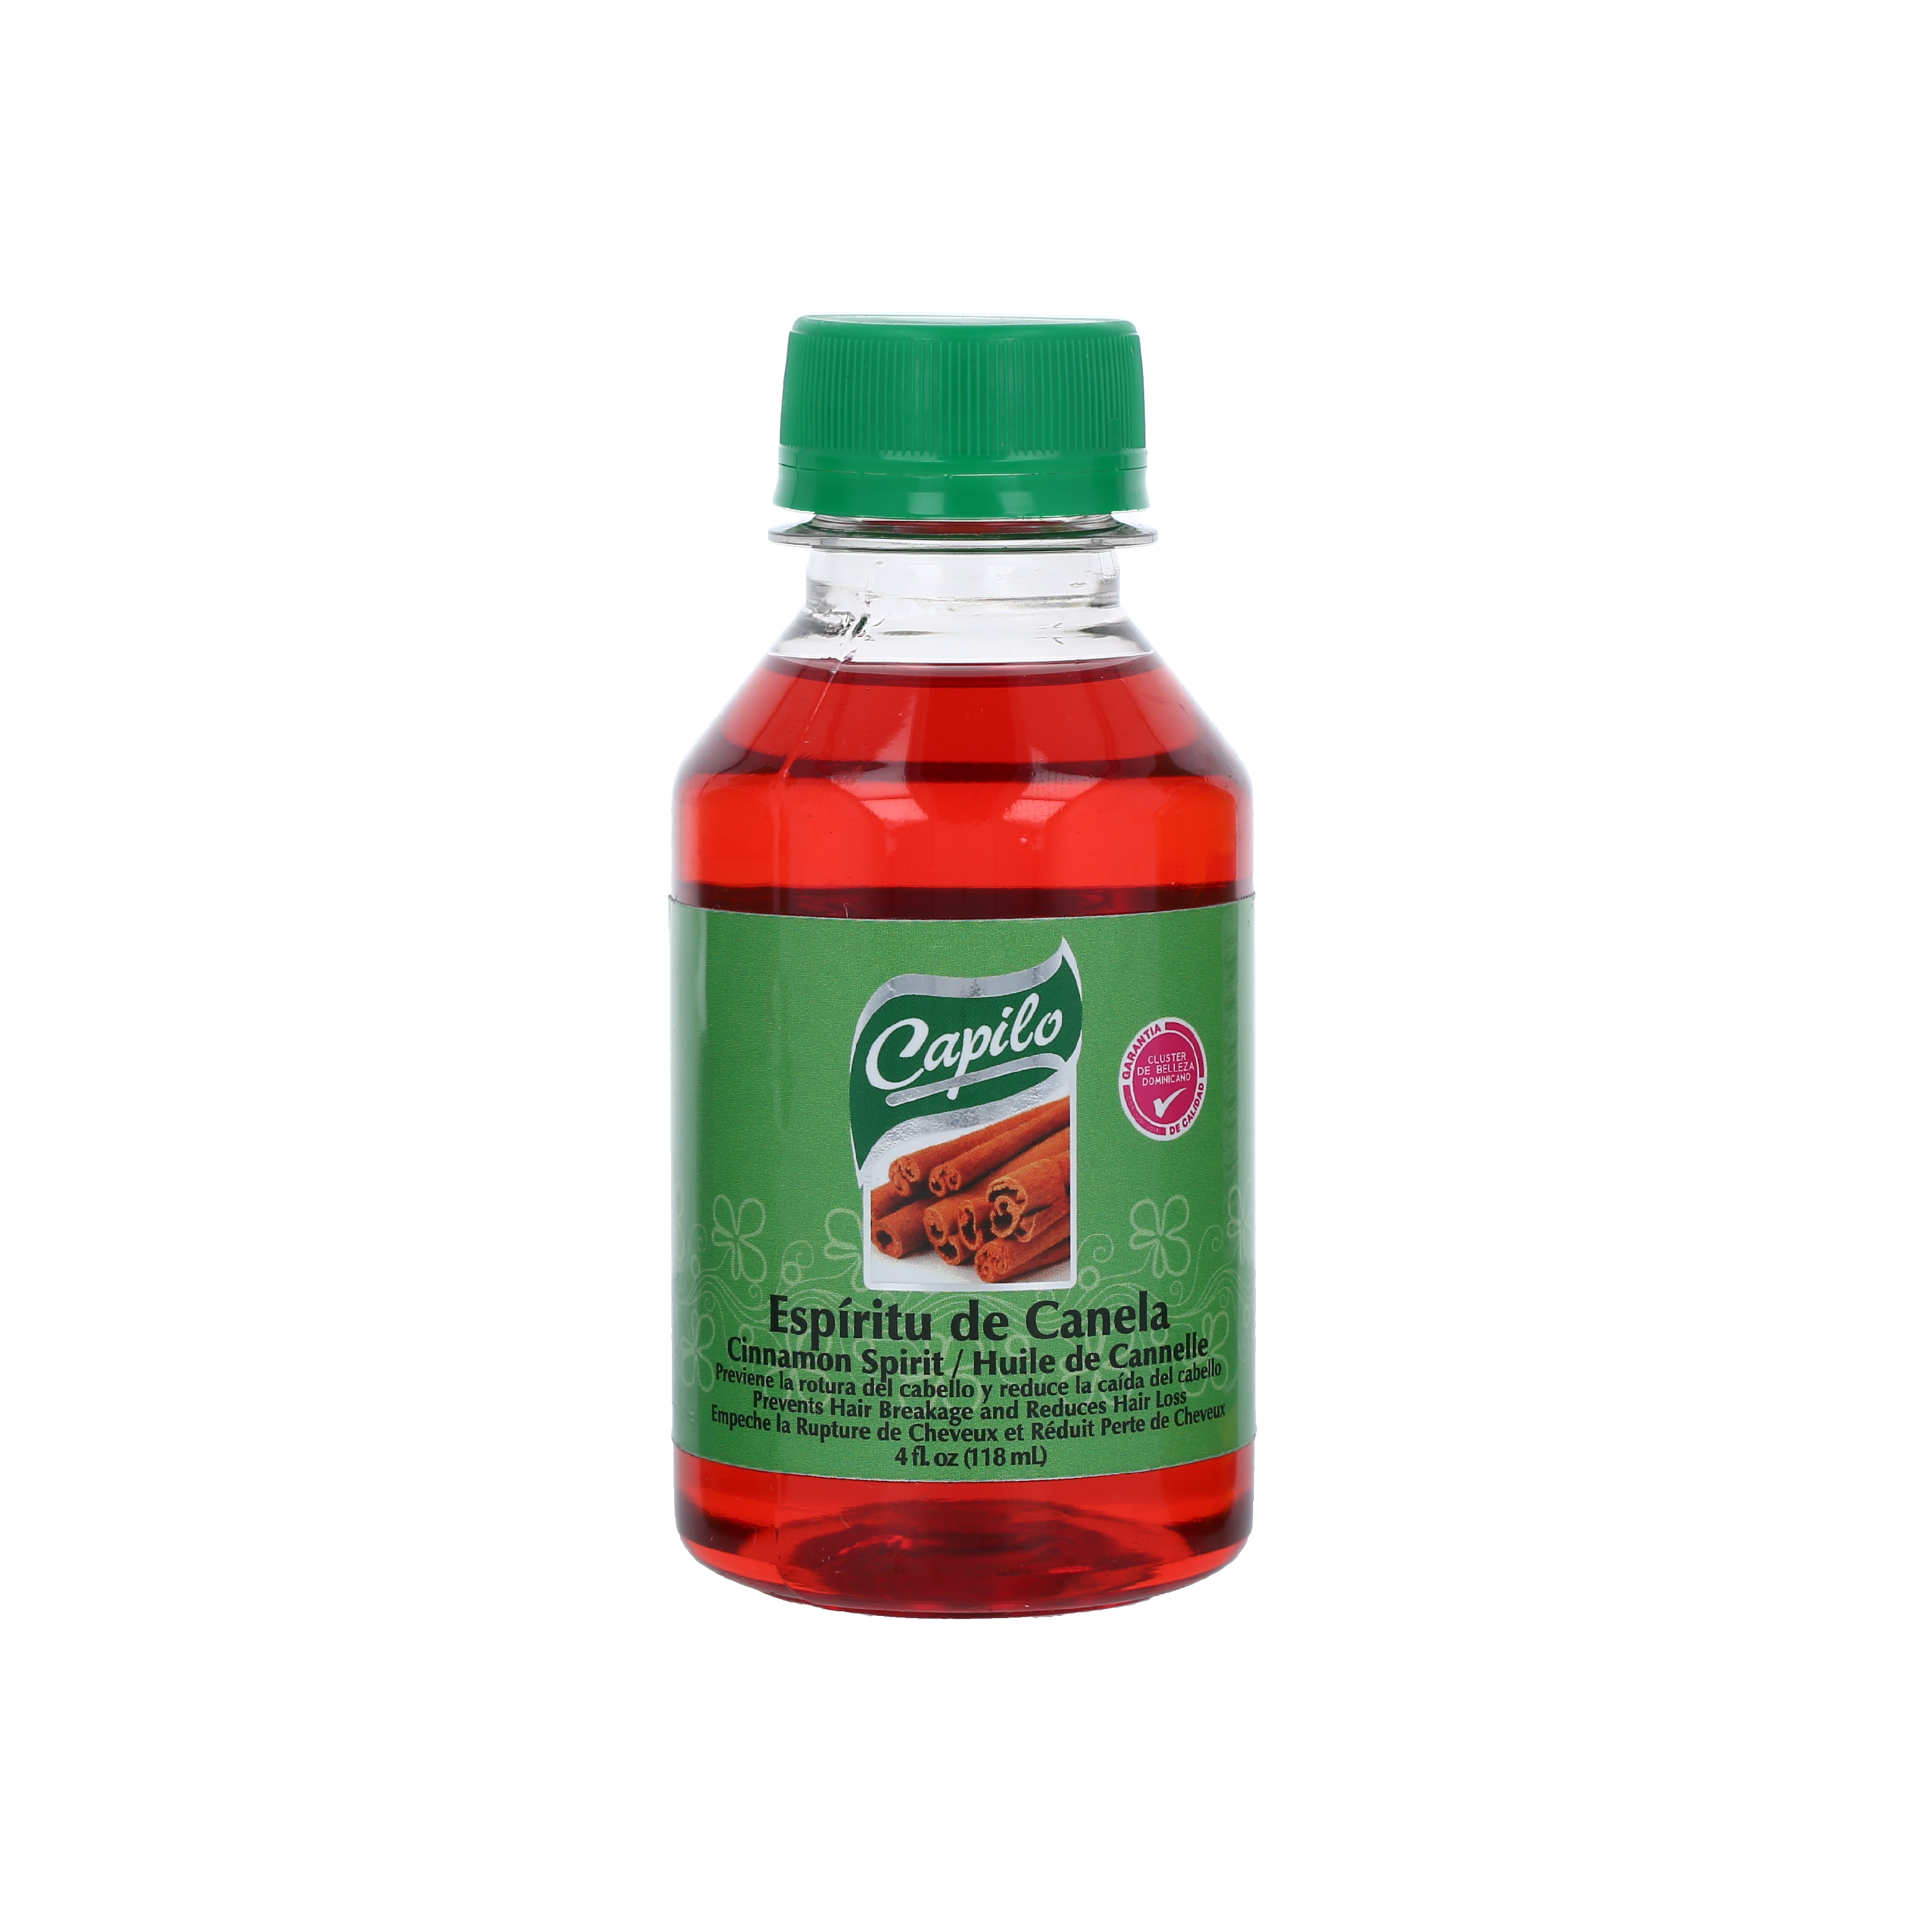 Capilo Cinnamon Spirit Oil, Fórmula para fortalecedor capilar (botella –  CAPILO USA